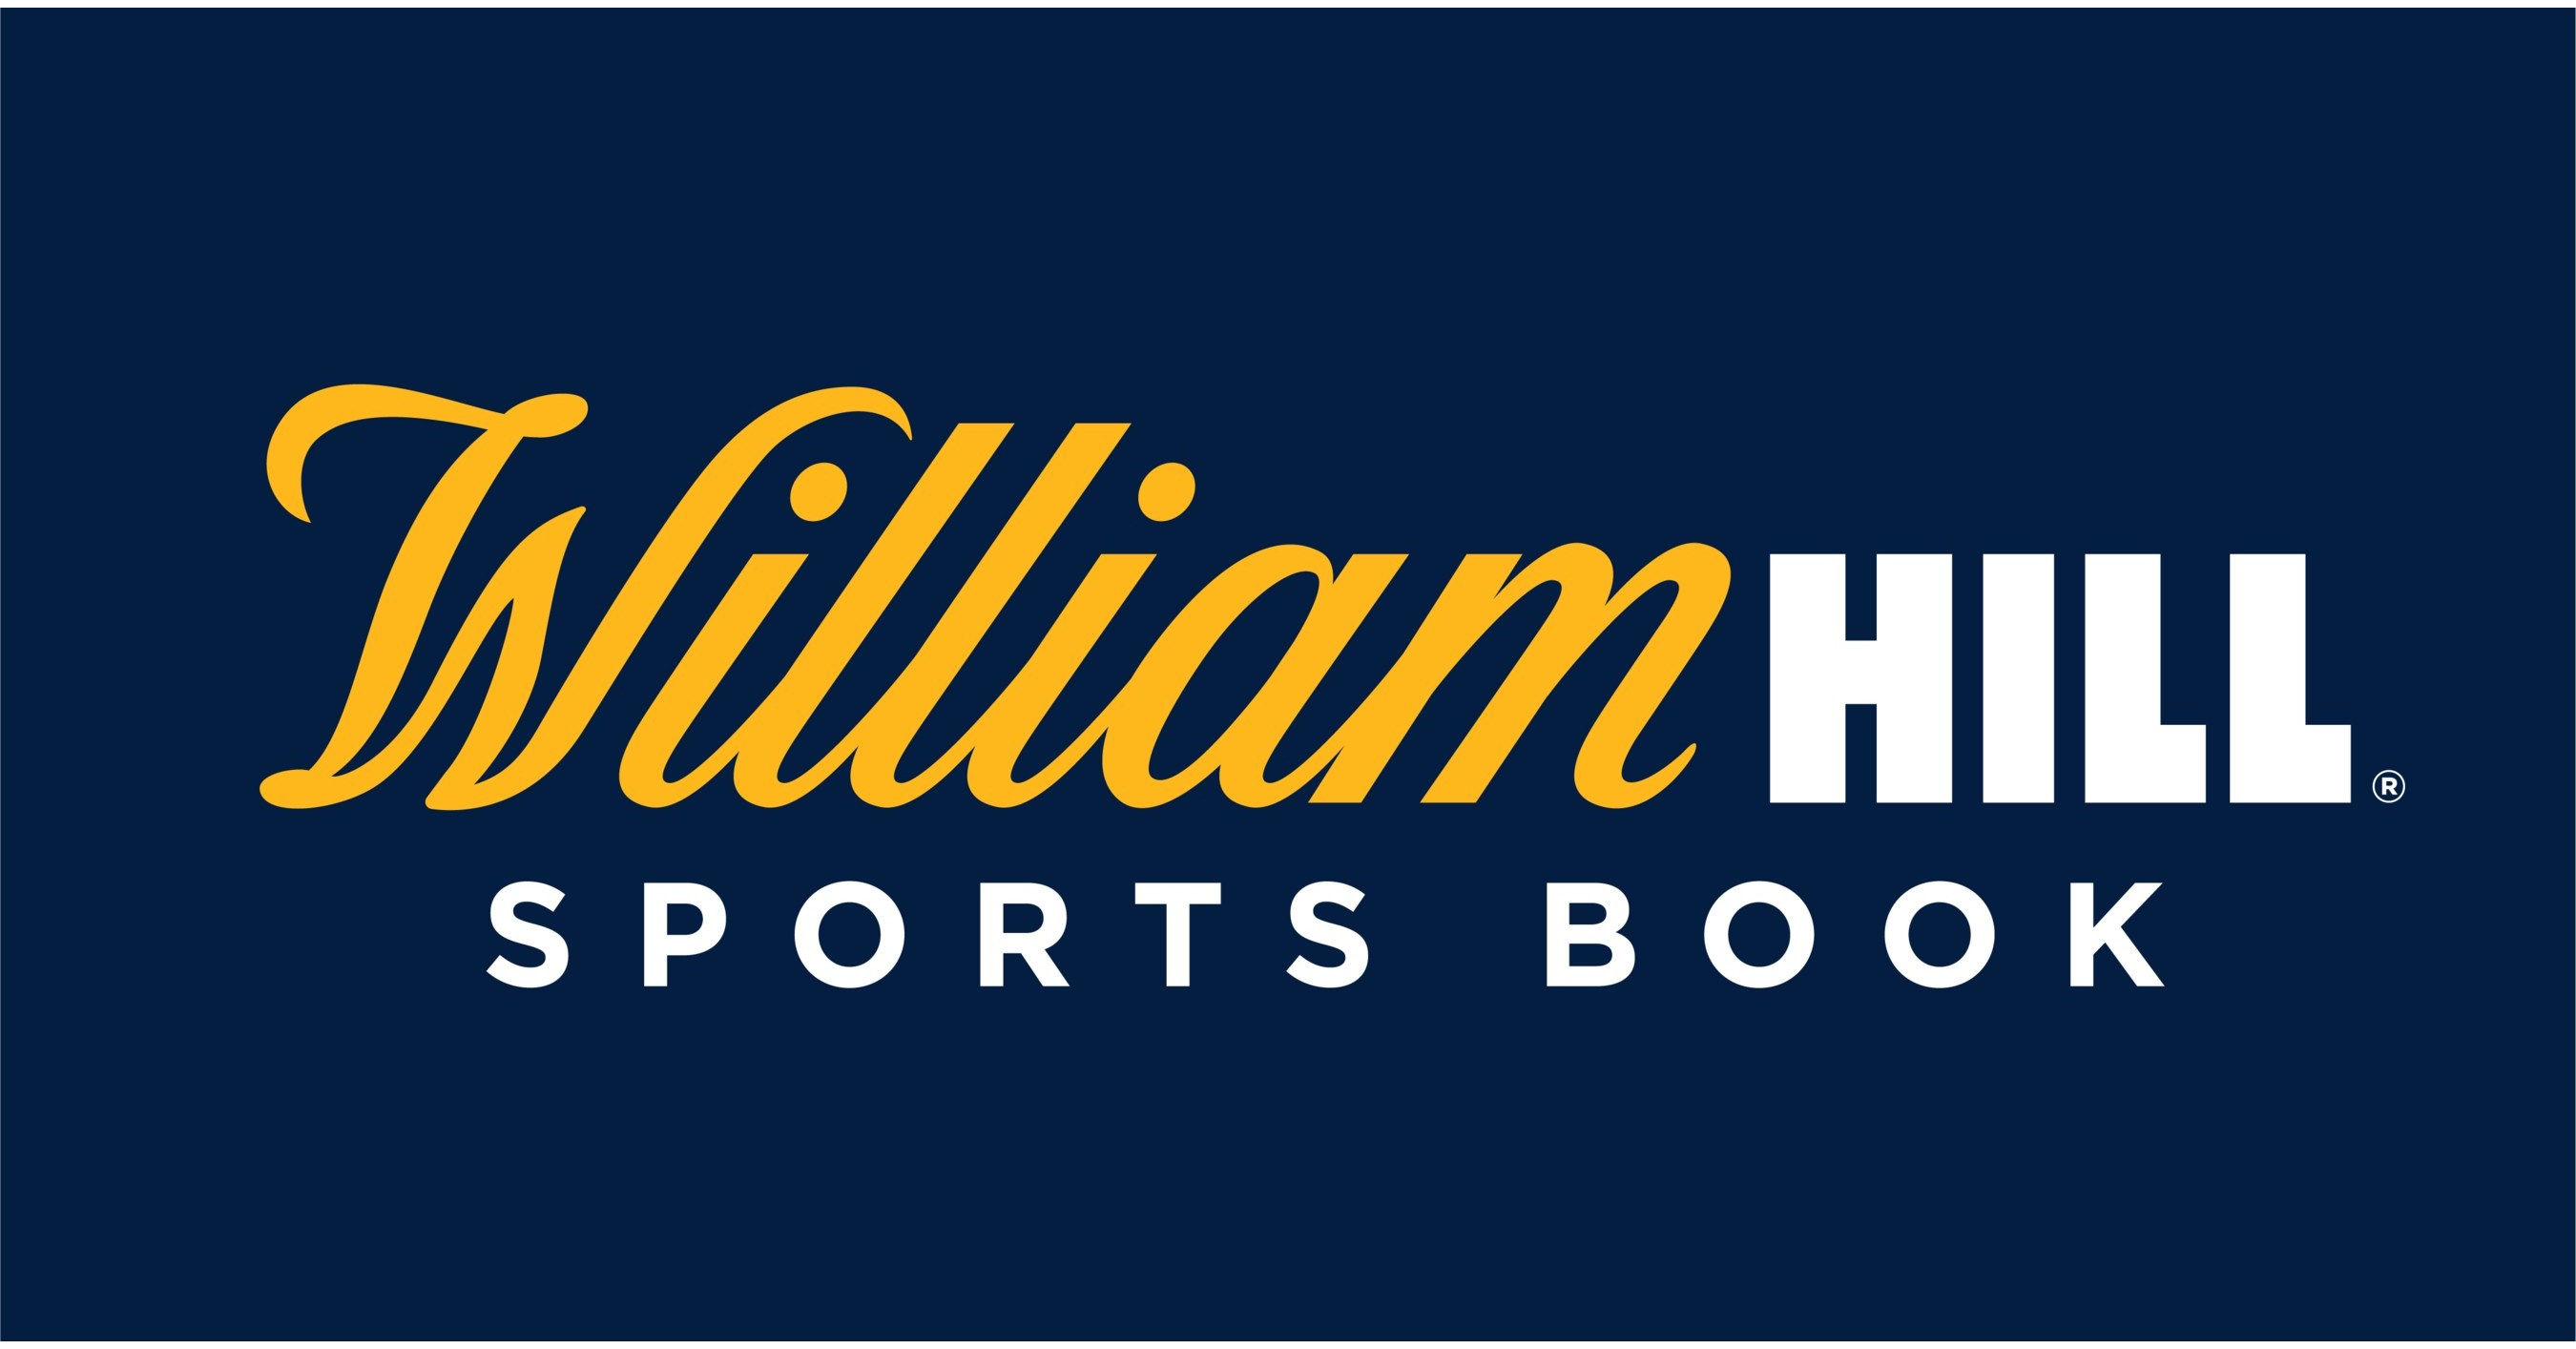 William hill sportsbook pa betfair com cricket betting free